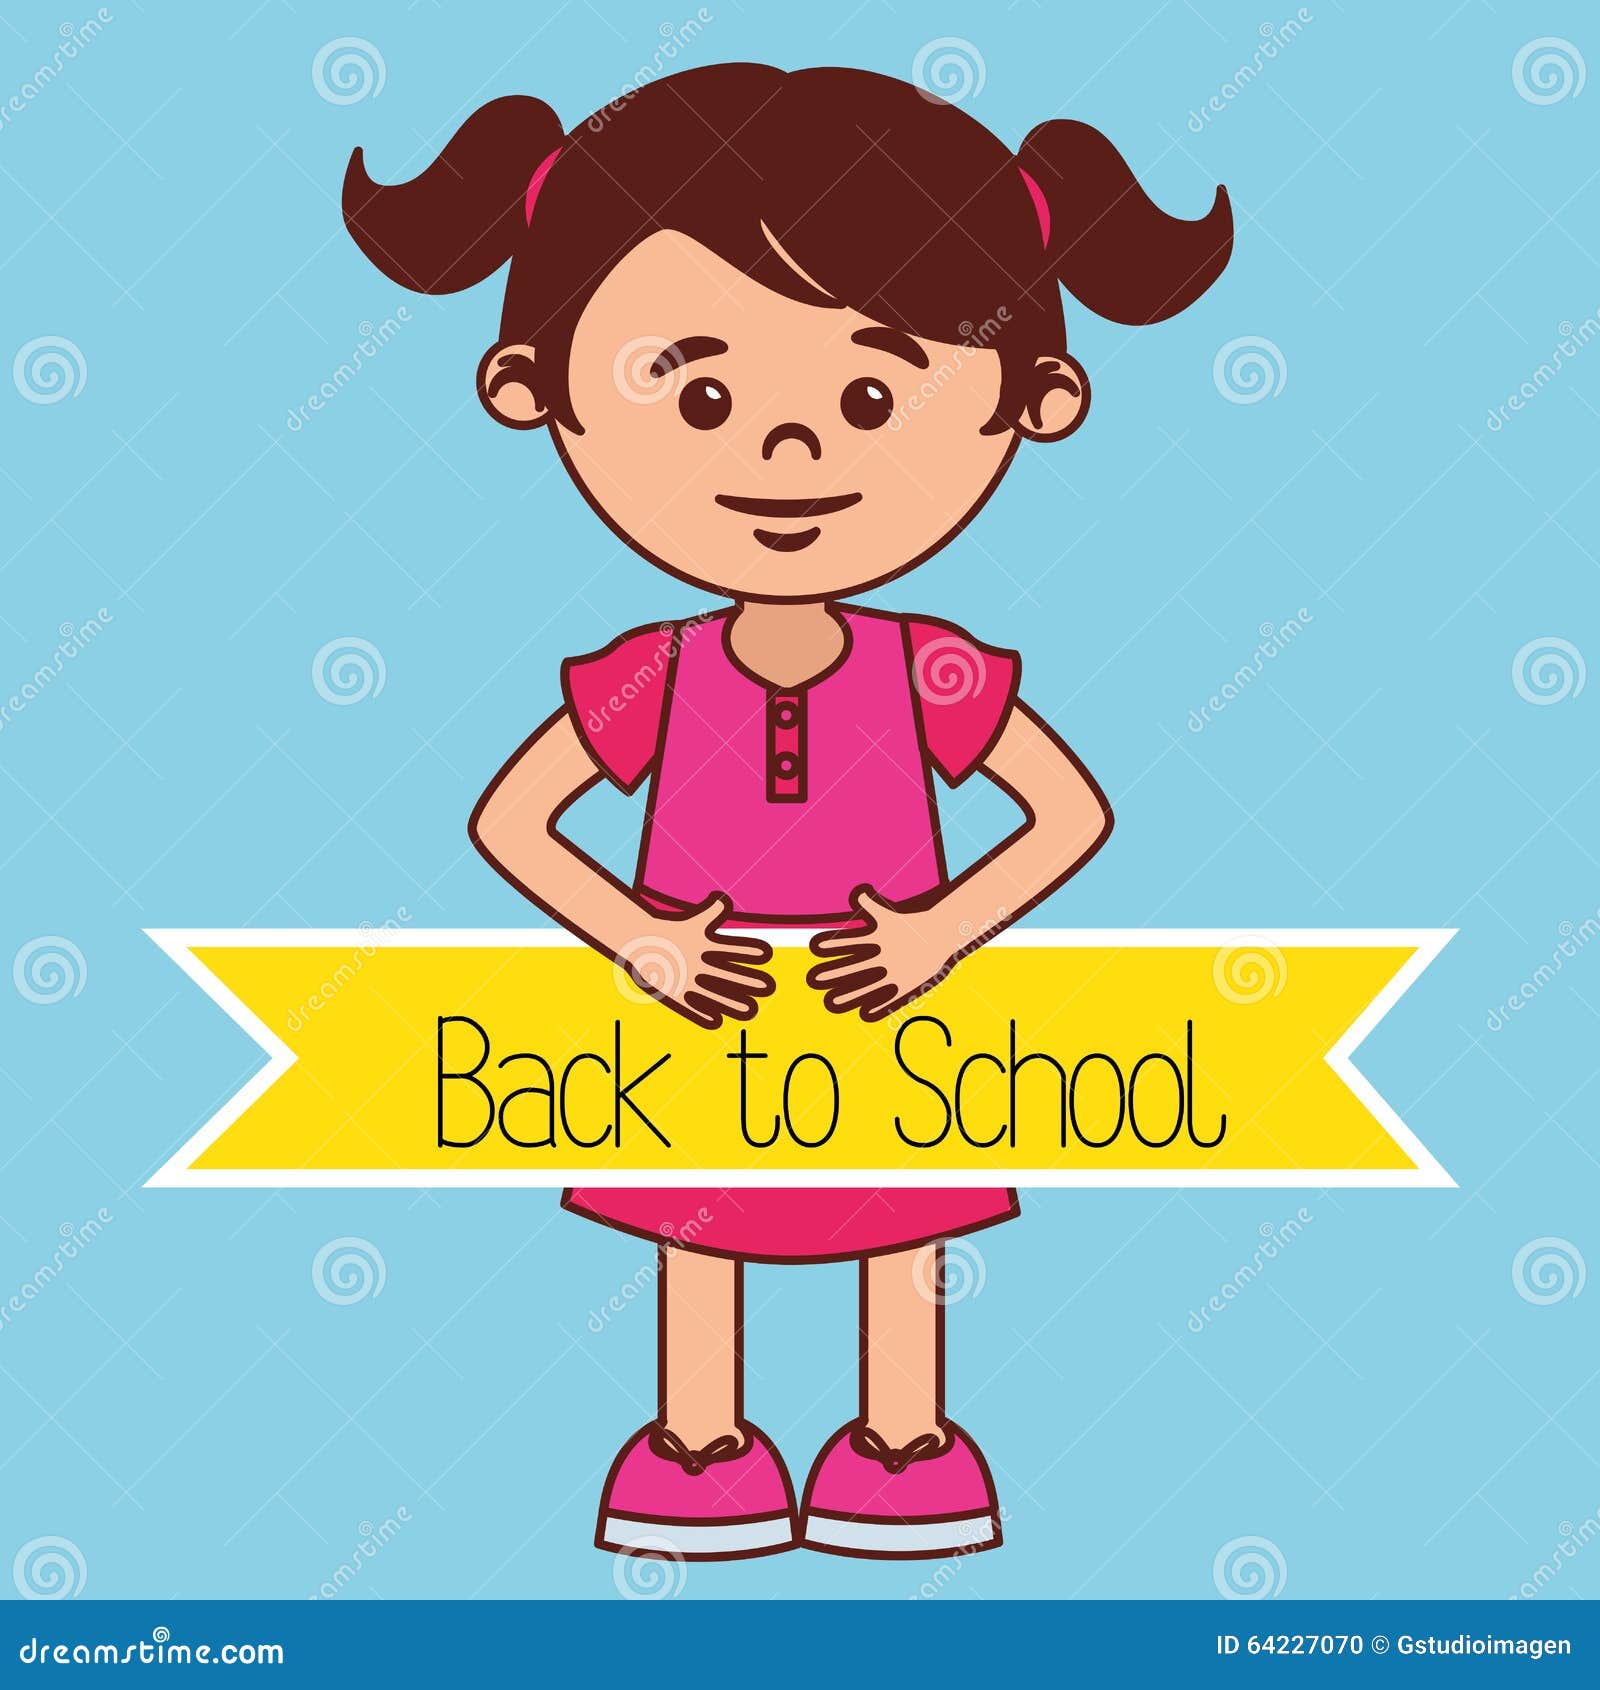 Back to school season stock illustration. Illustration of school - 64227070